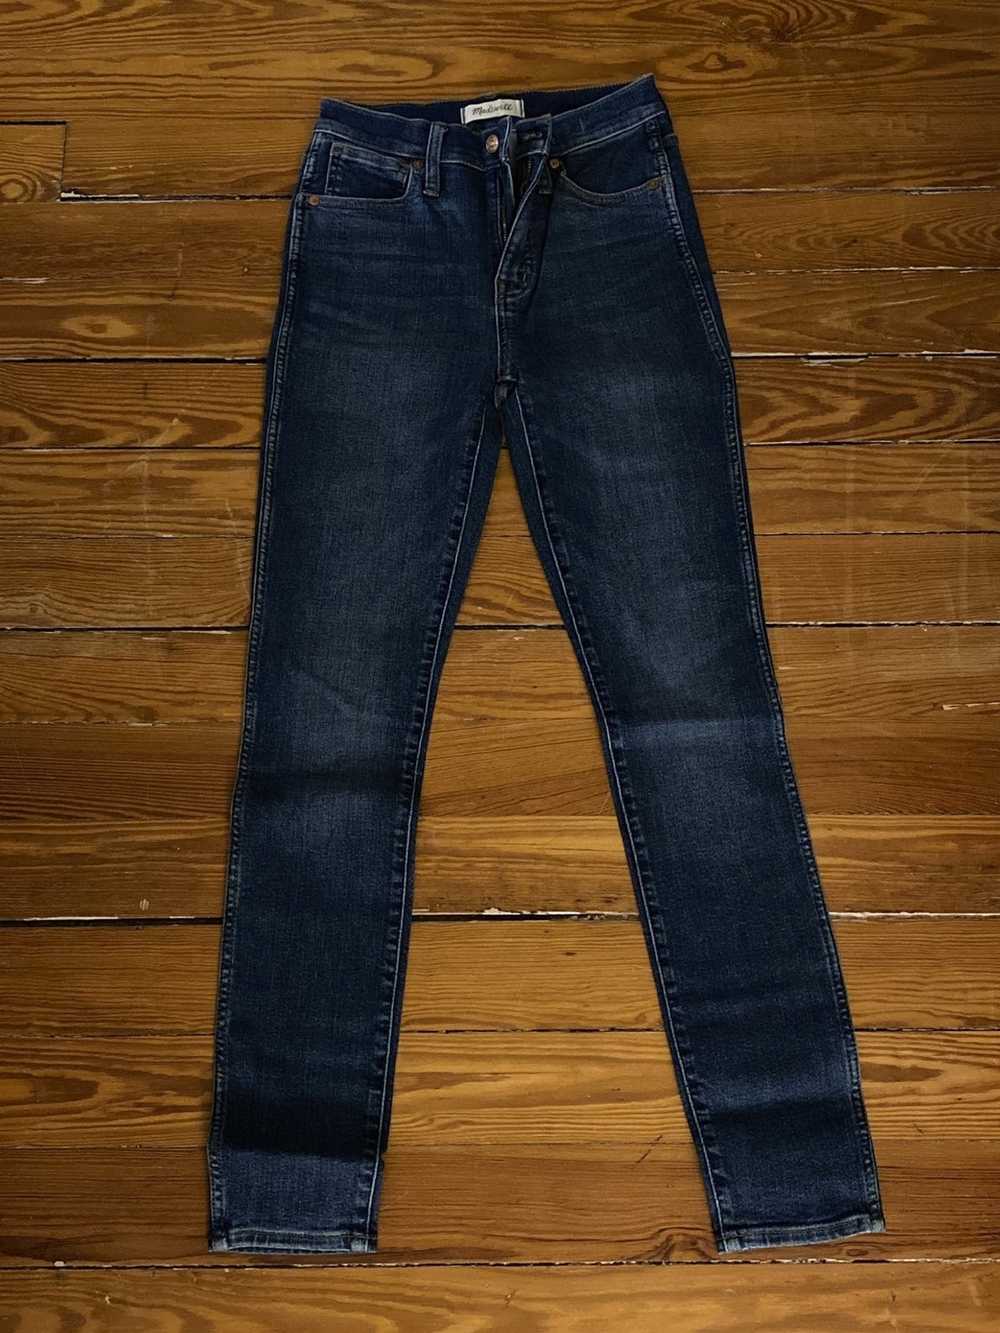 Madewell Madewell High Waisted Jeans - image 1